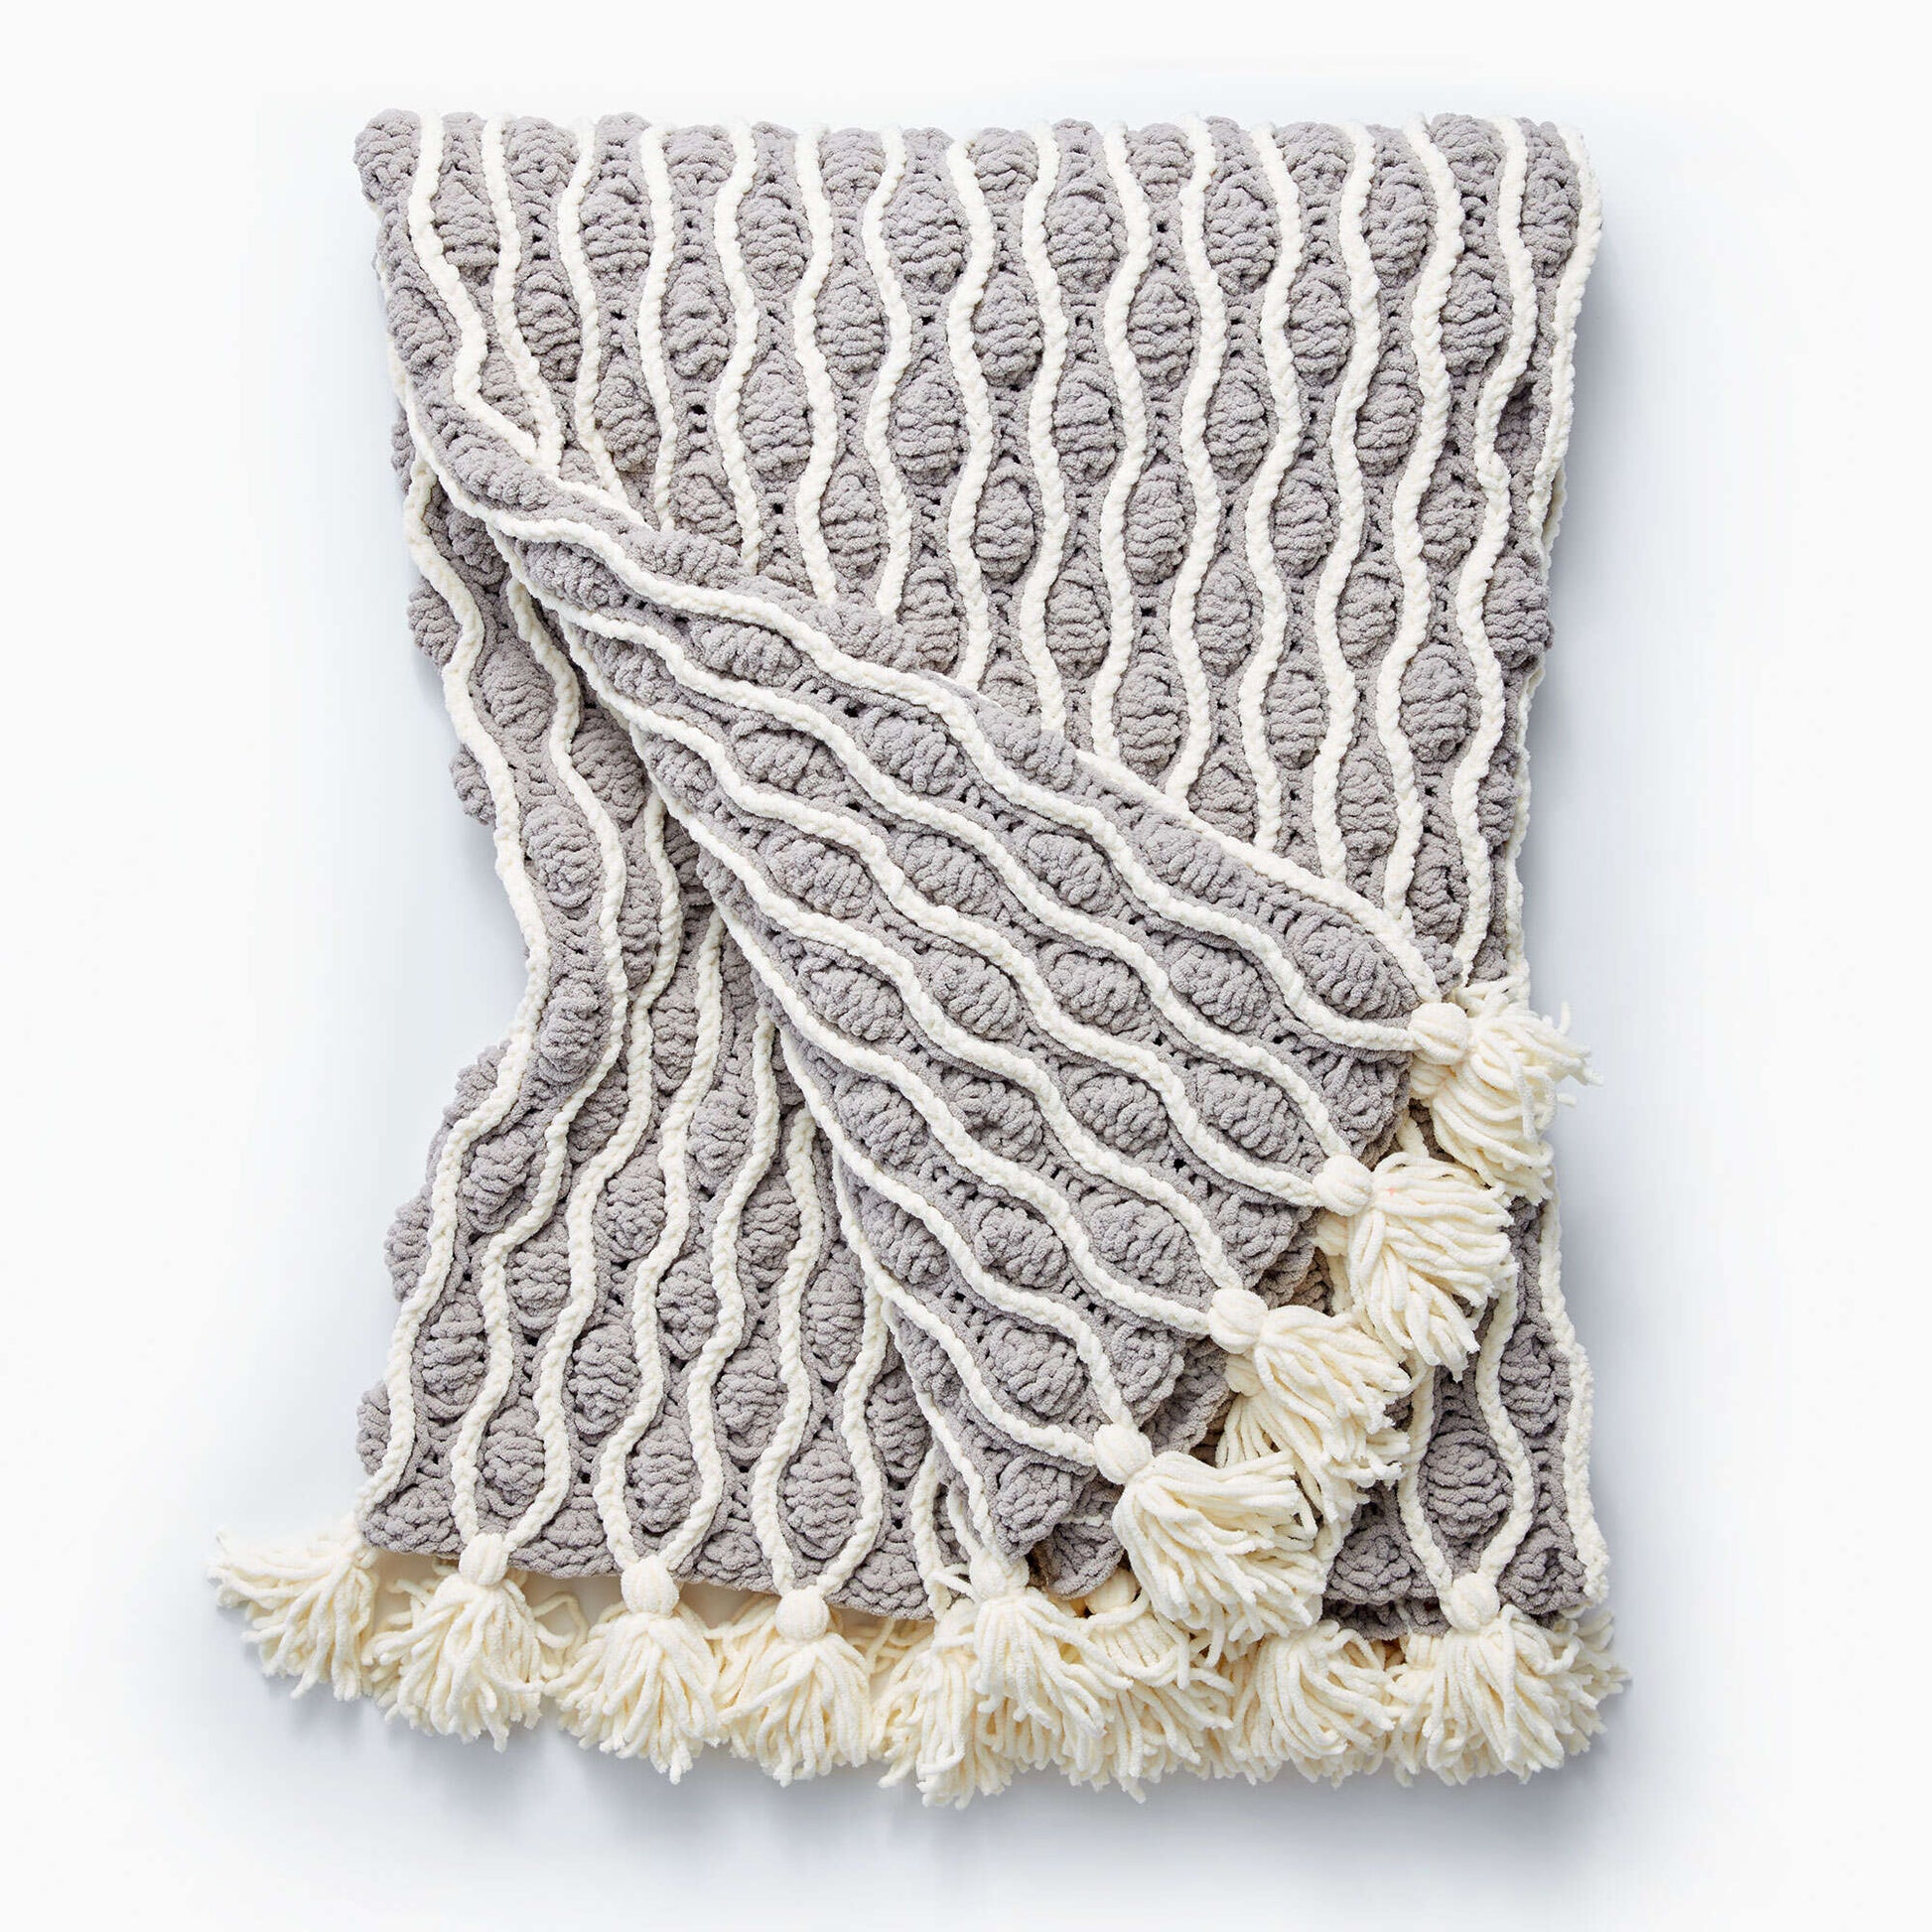 Bernat Trellis & Tassels Knit Afghan Knit Blanket made in Bernat Blanket yarn